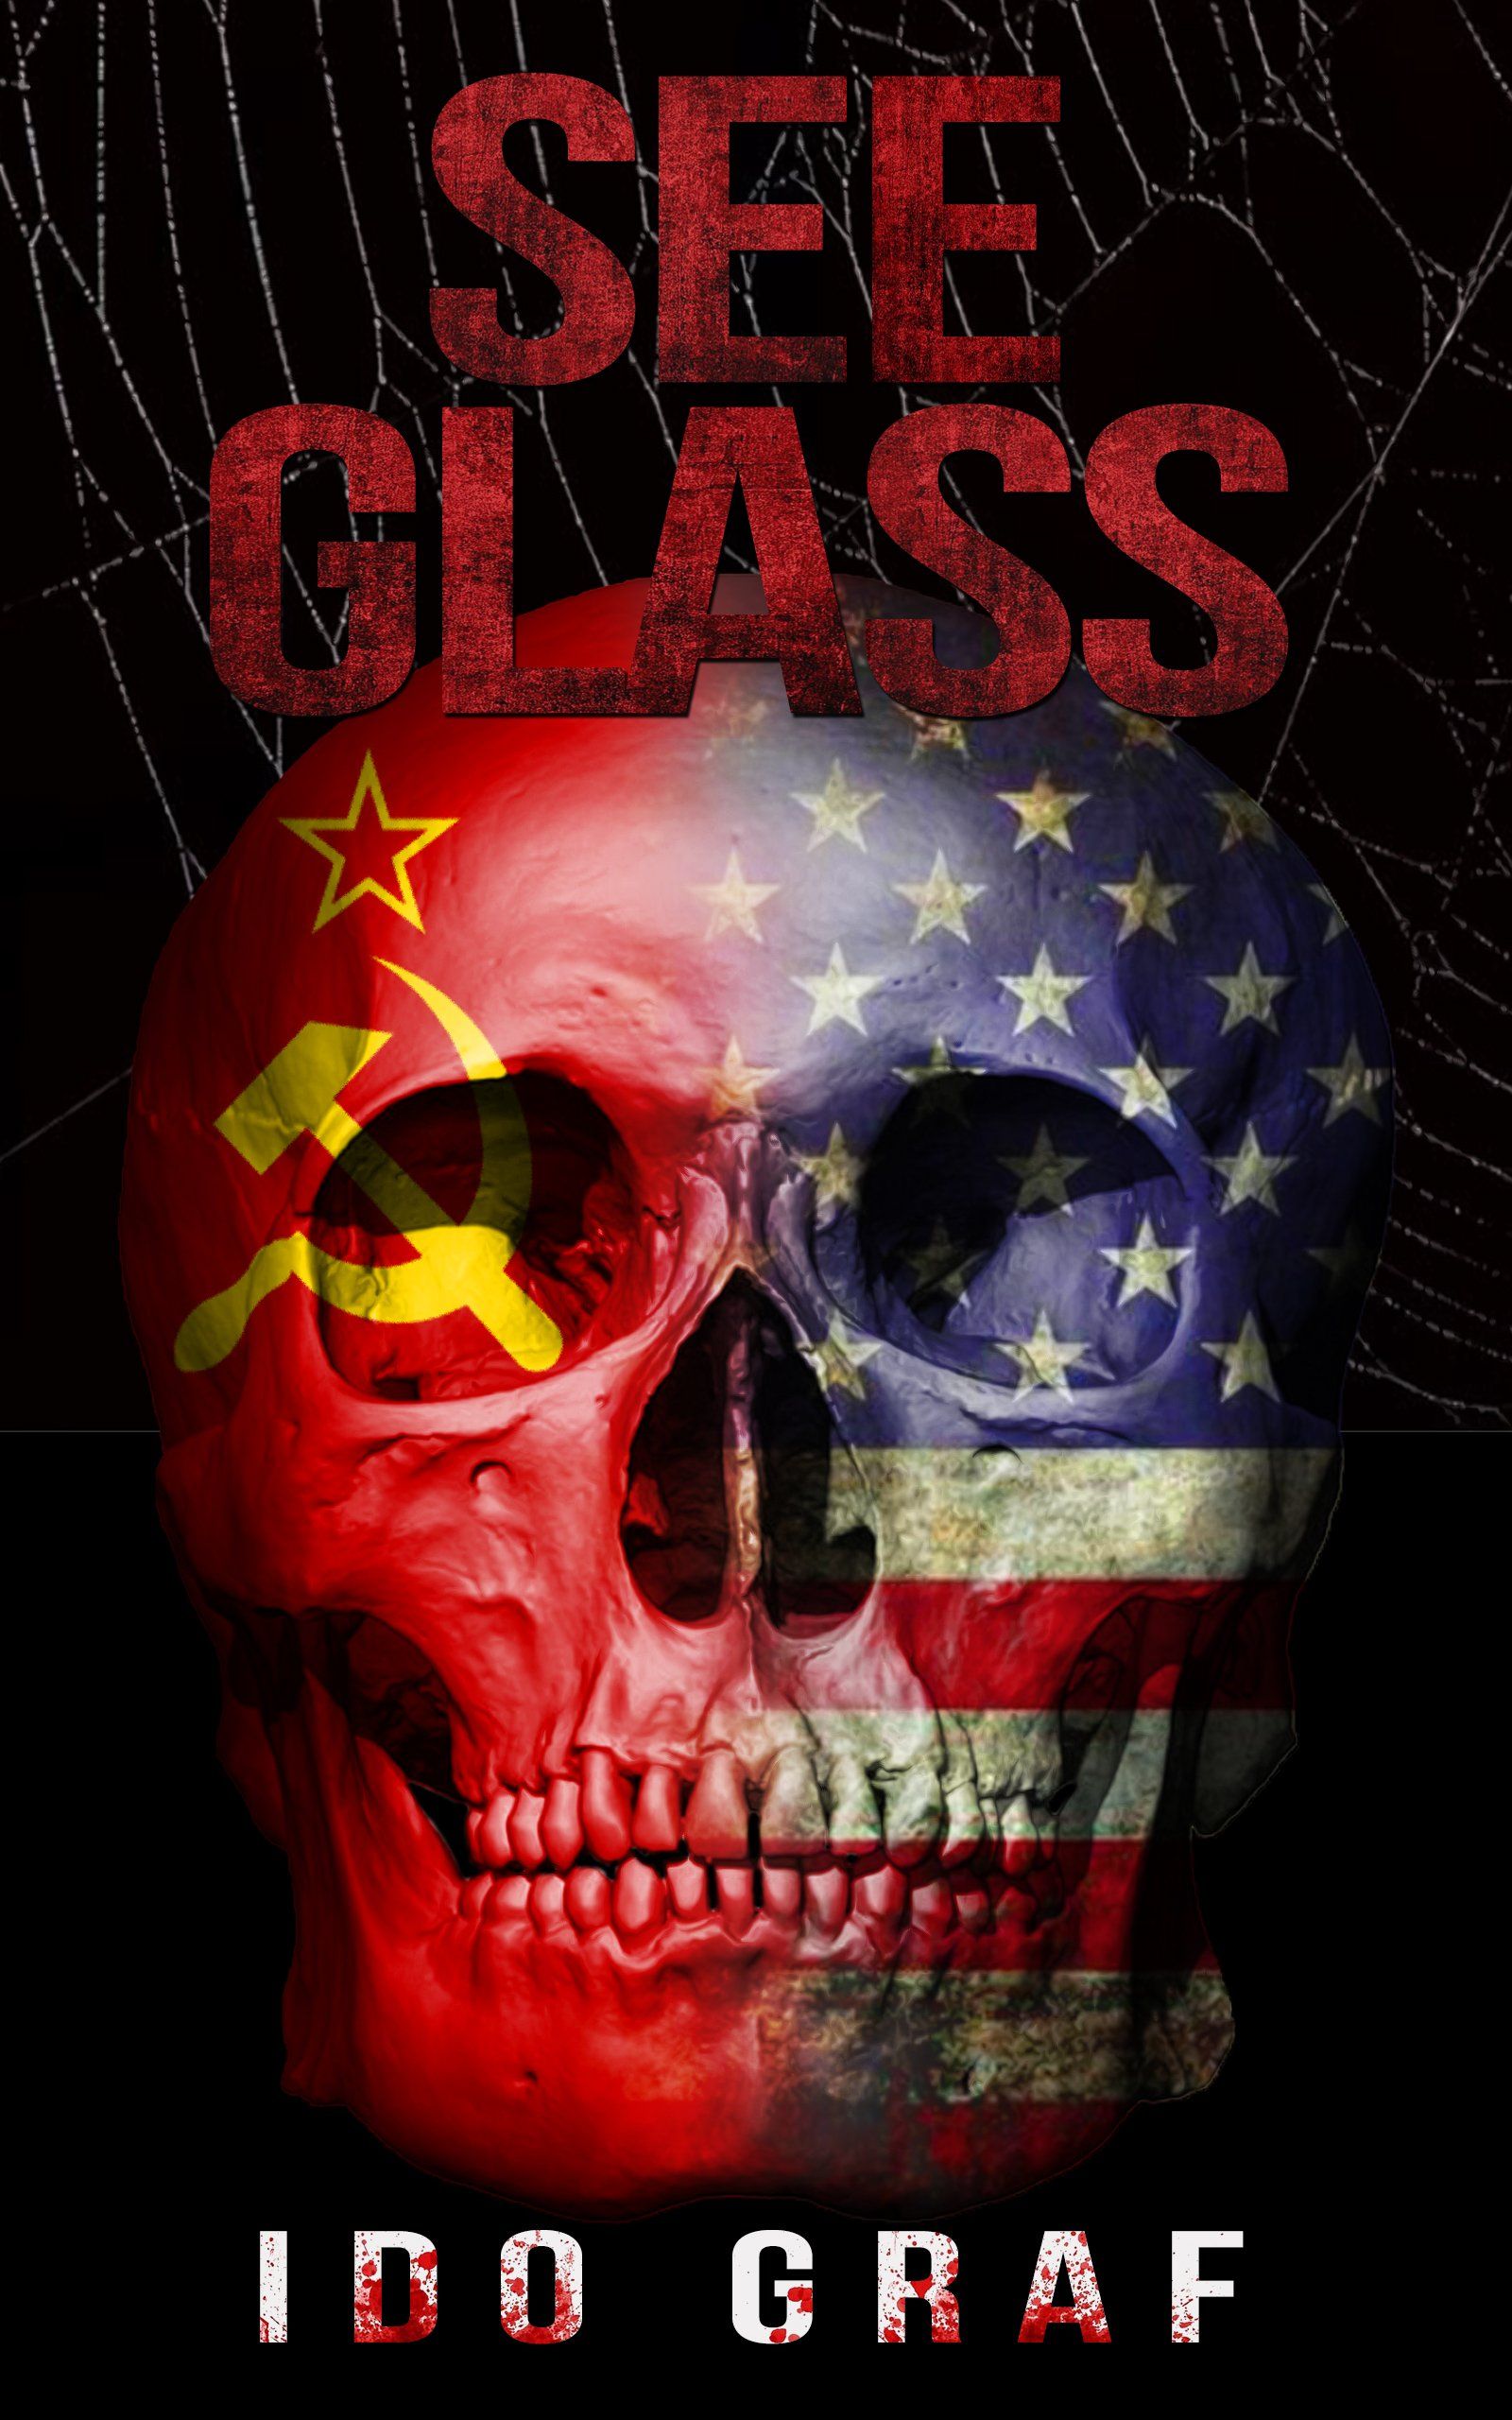 See Glass thriller by Ido Graf